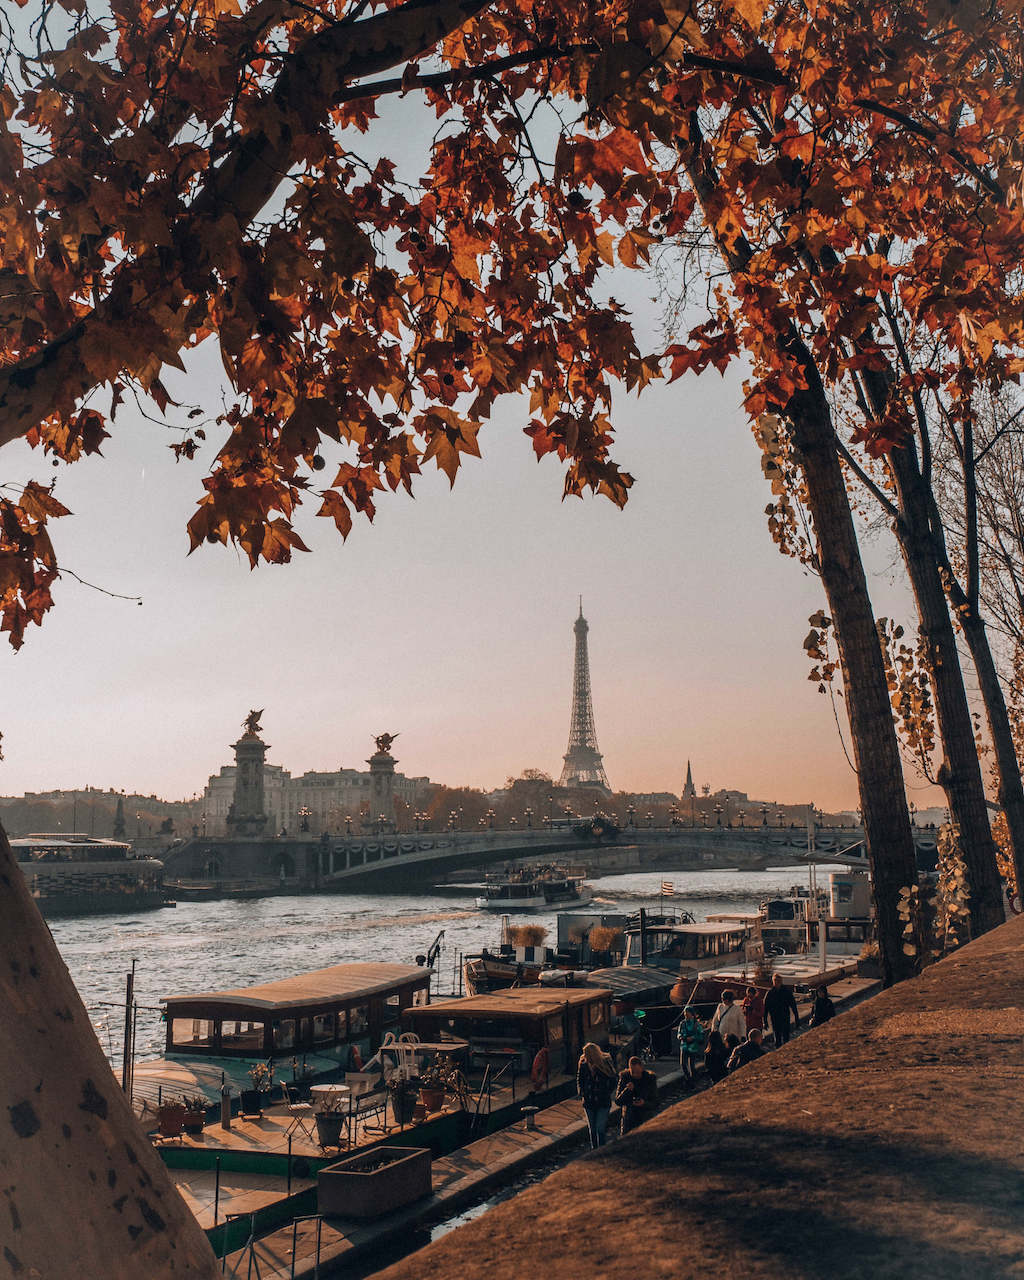 Autumn colours near the Eiffel Tower - Paris - France